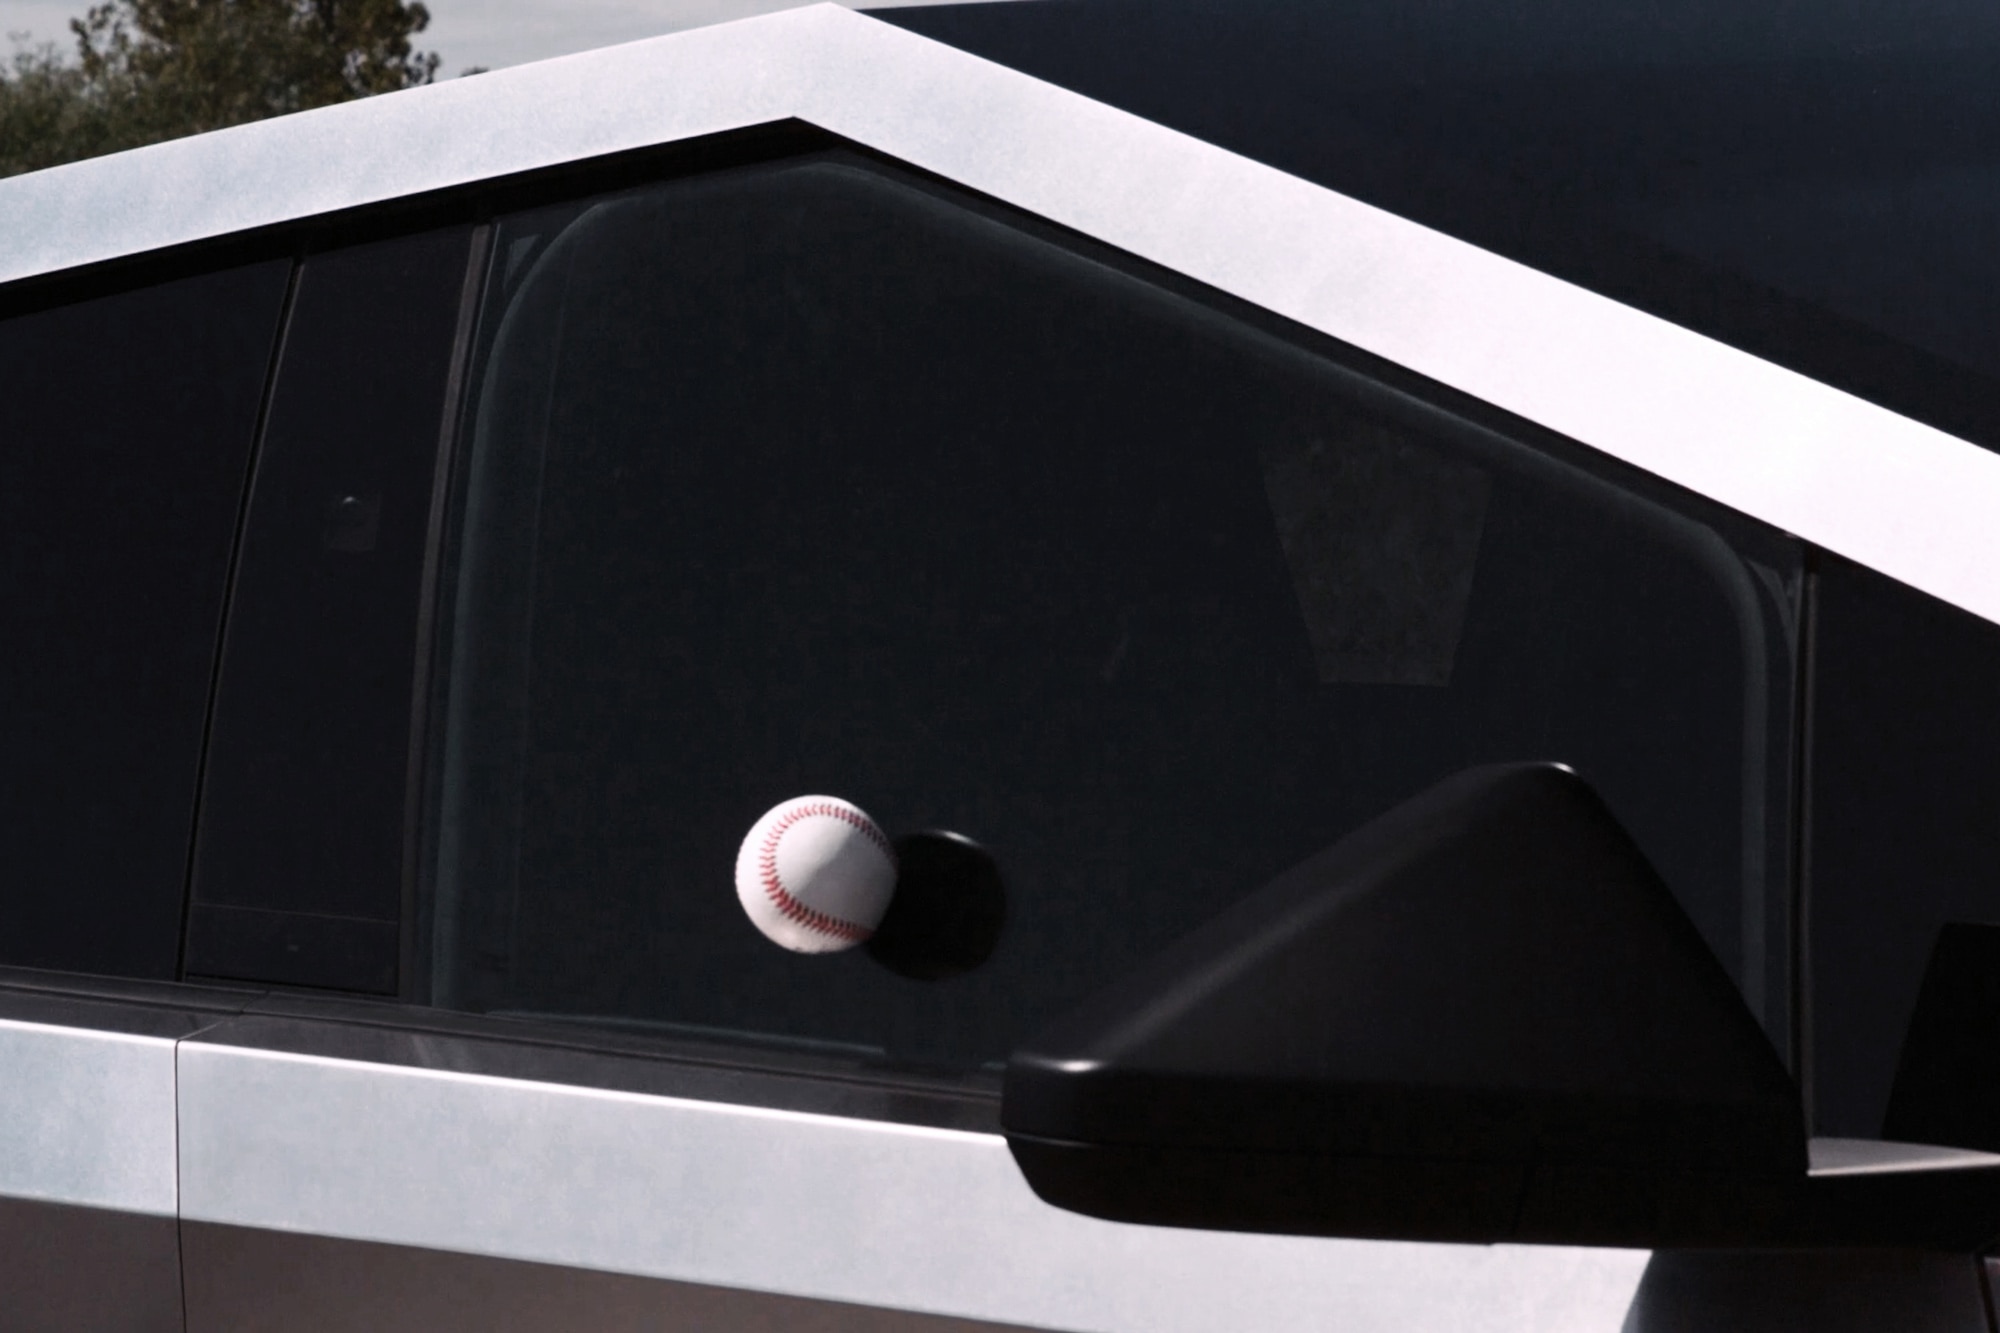 Baseball bouncing off window of a stainless-steel Tesla Cybertruck